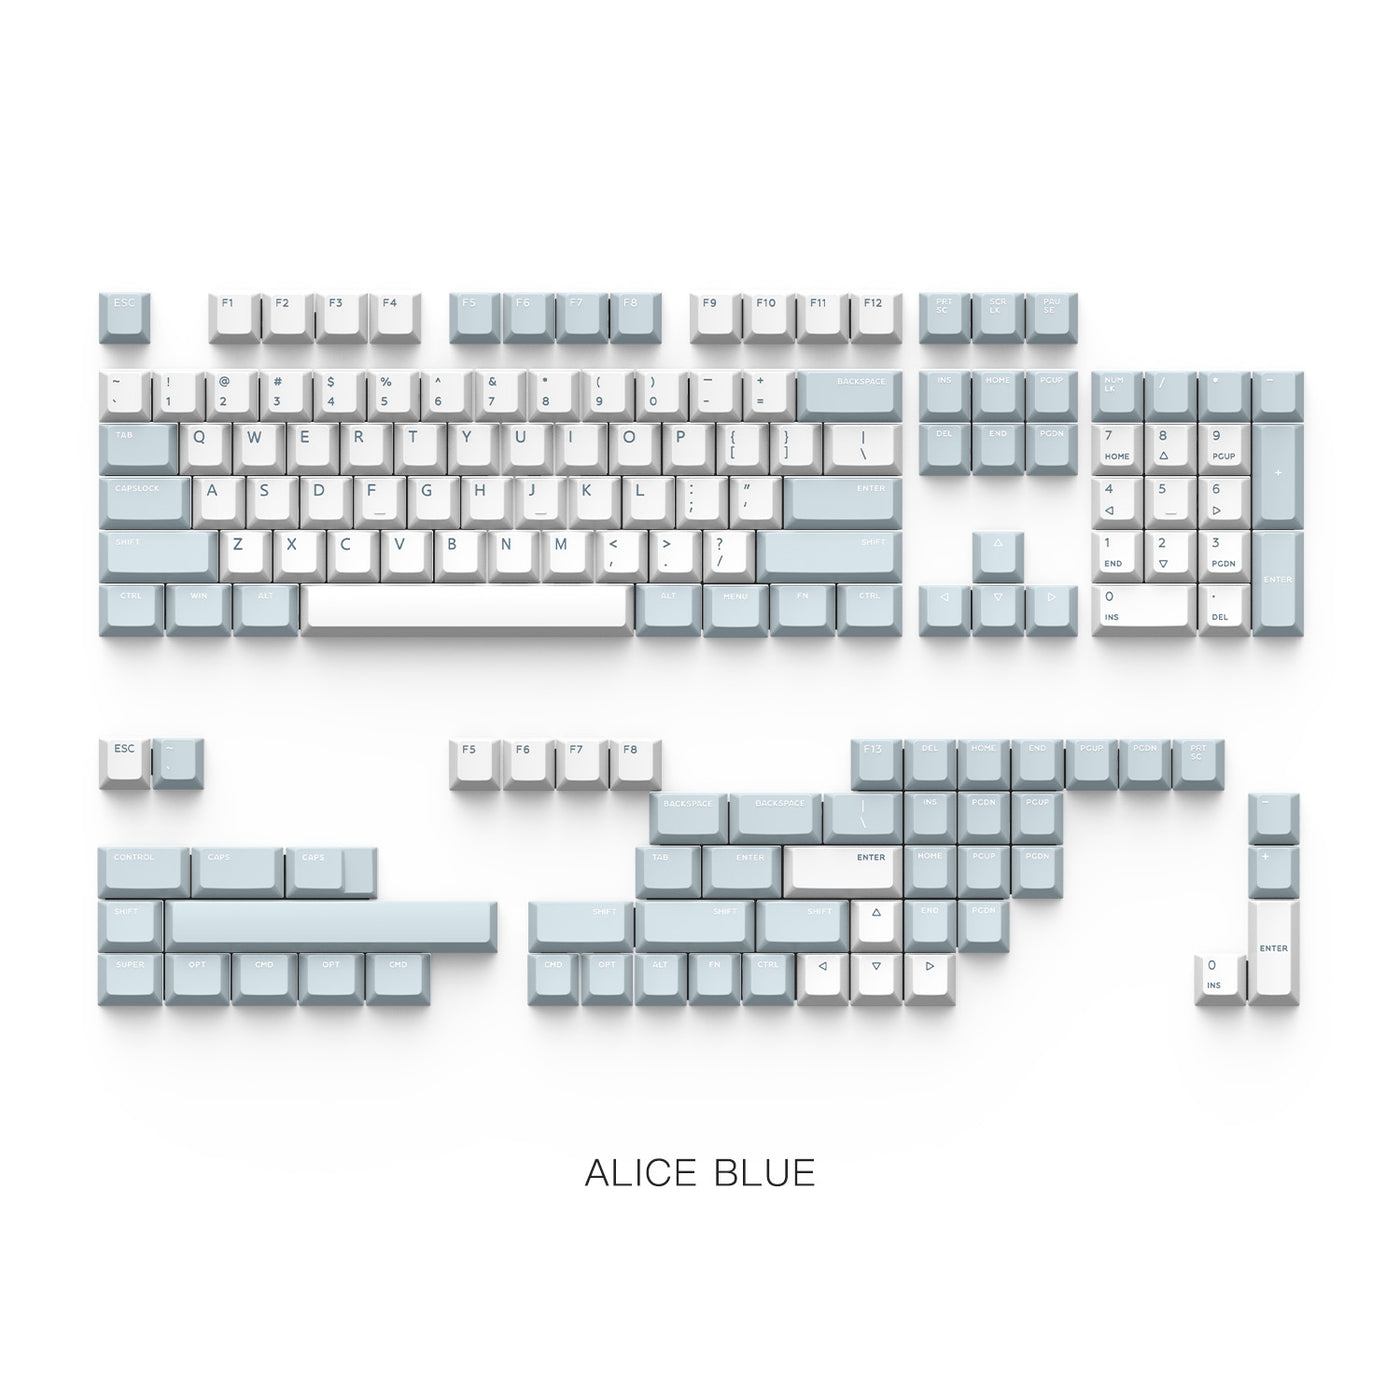 ALICE BLUE PBT Keycaps